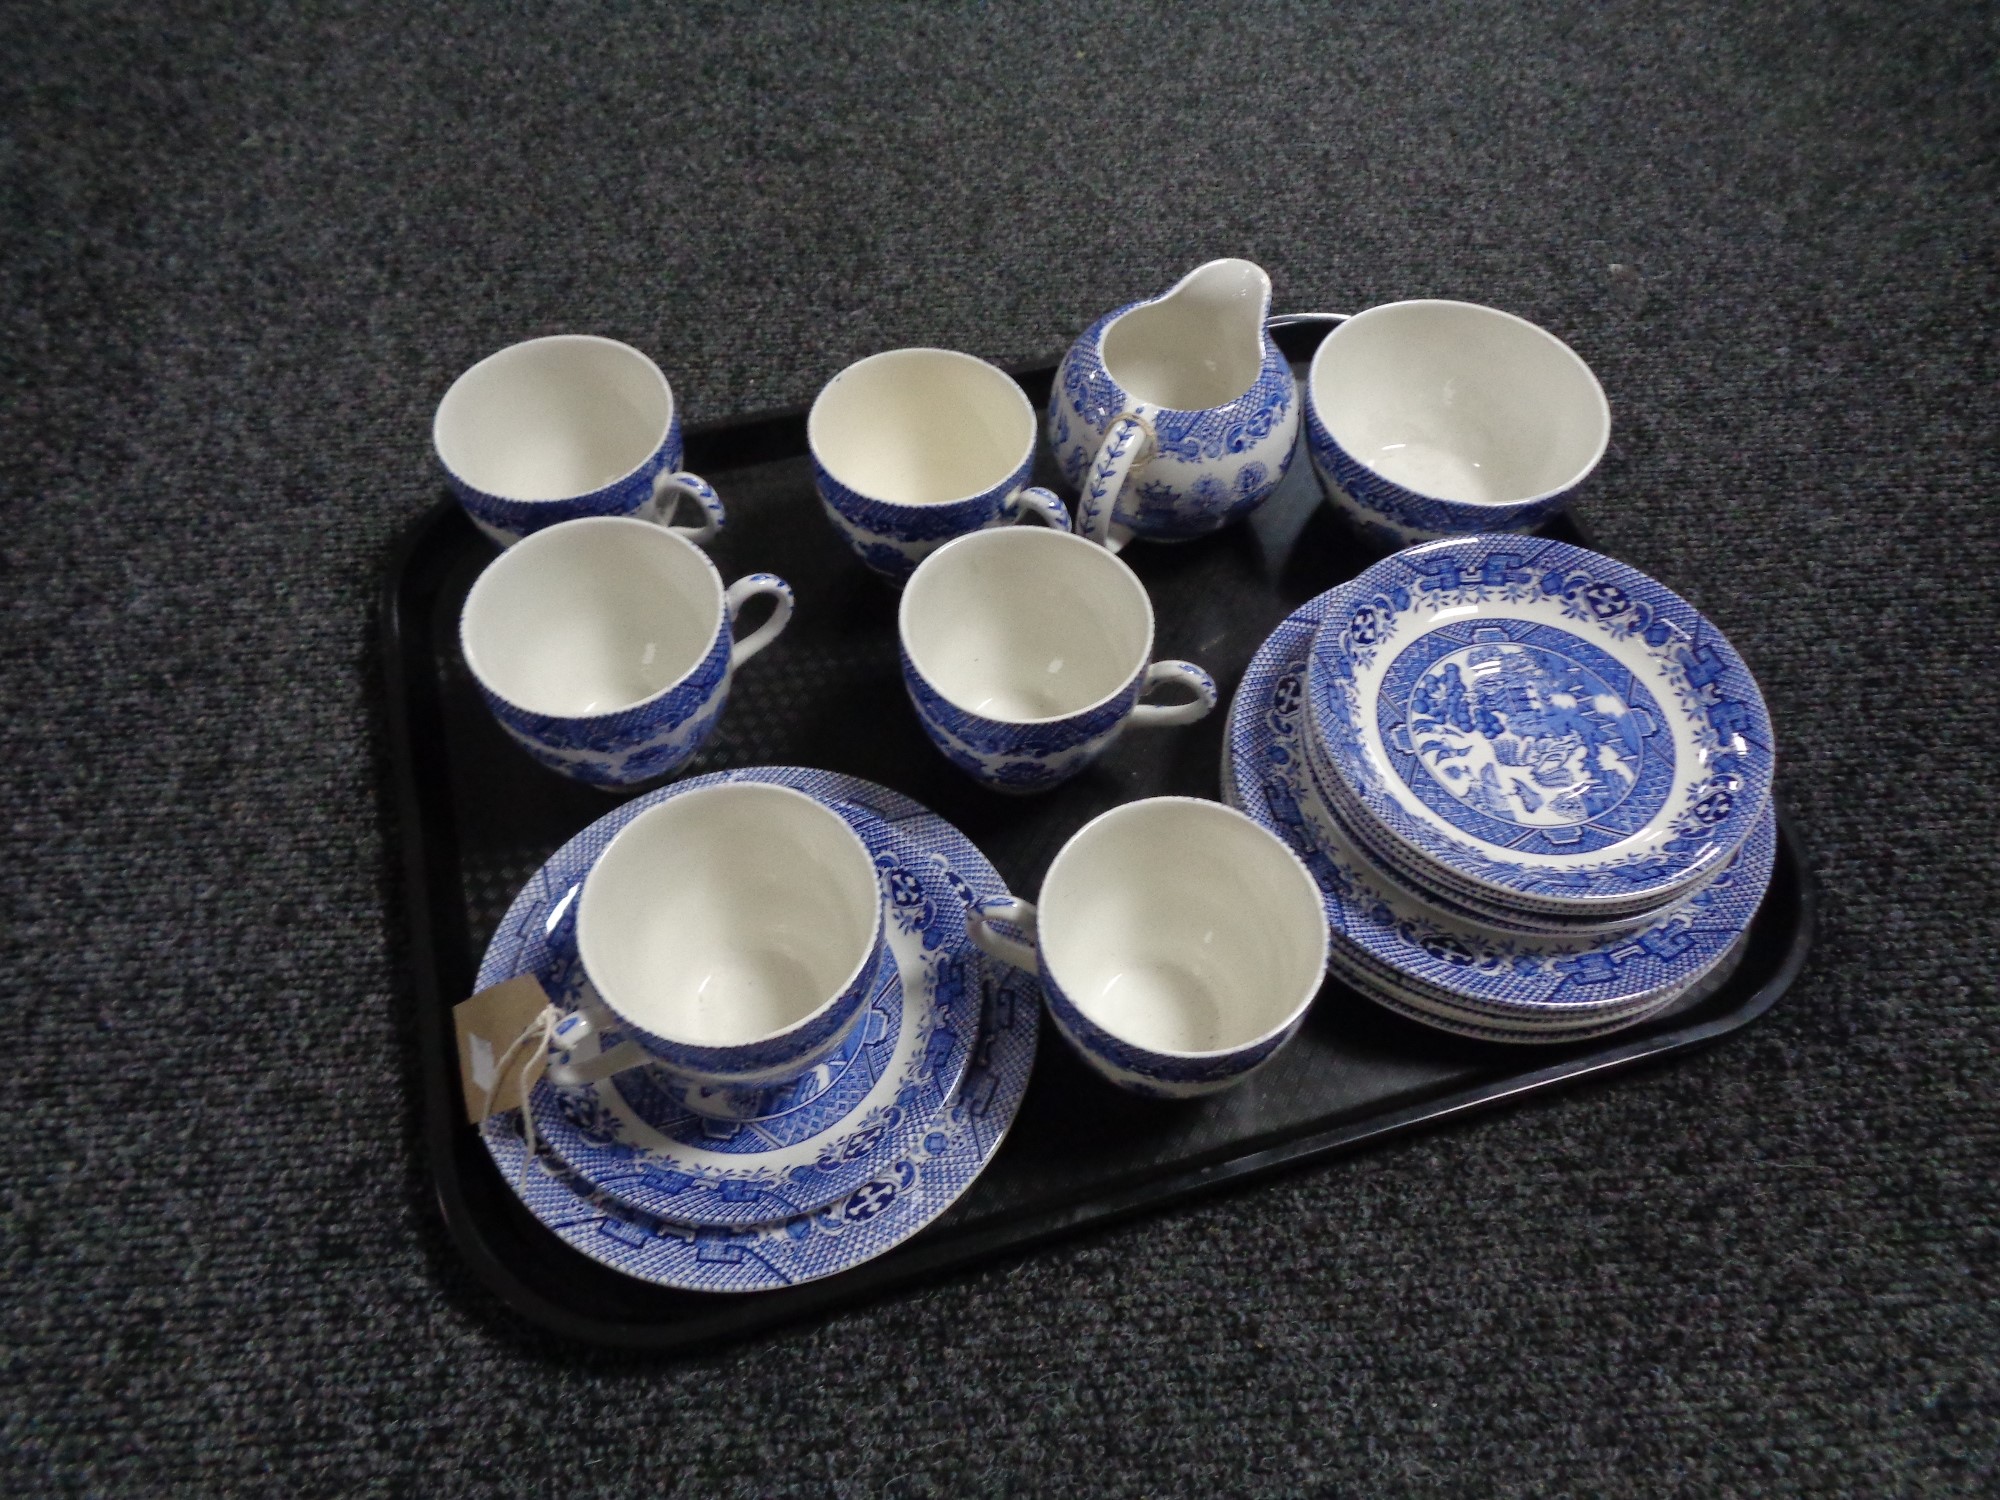 A tray of twenty piece Staffordshire willow pattern tea service